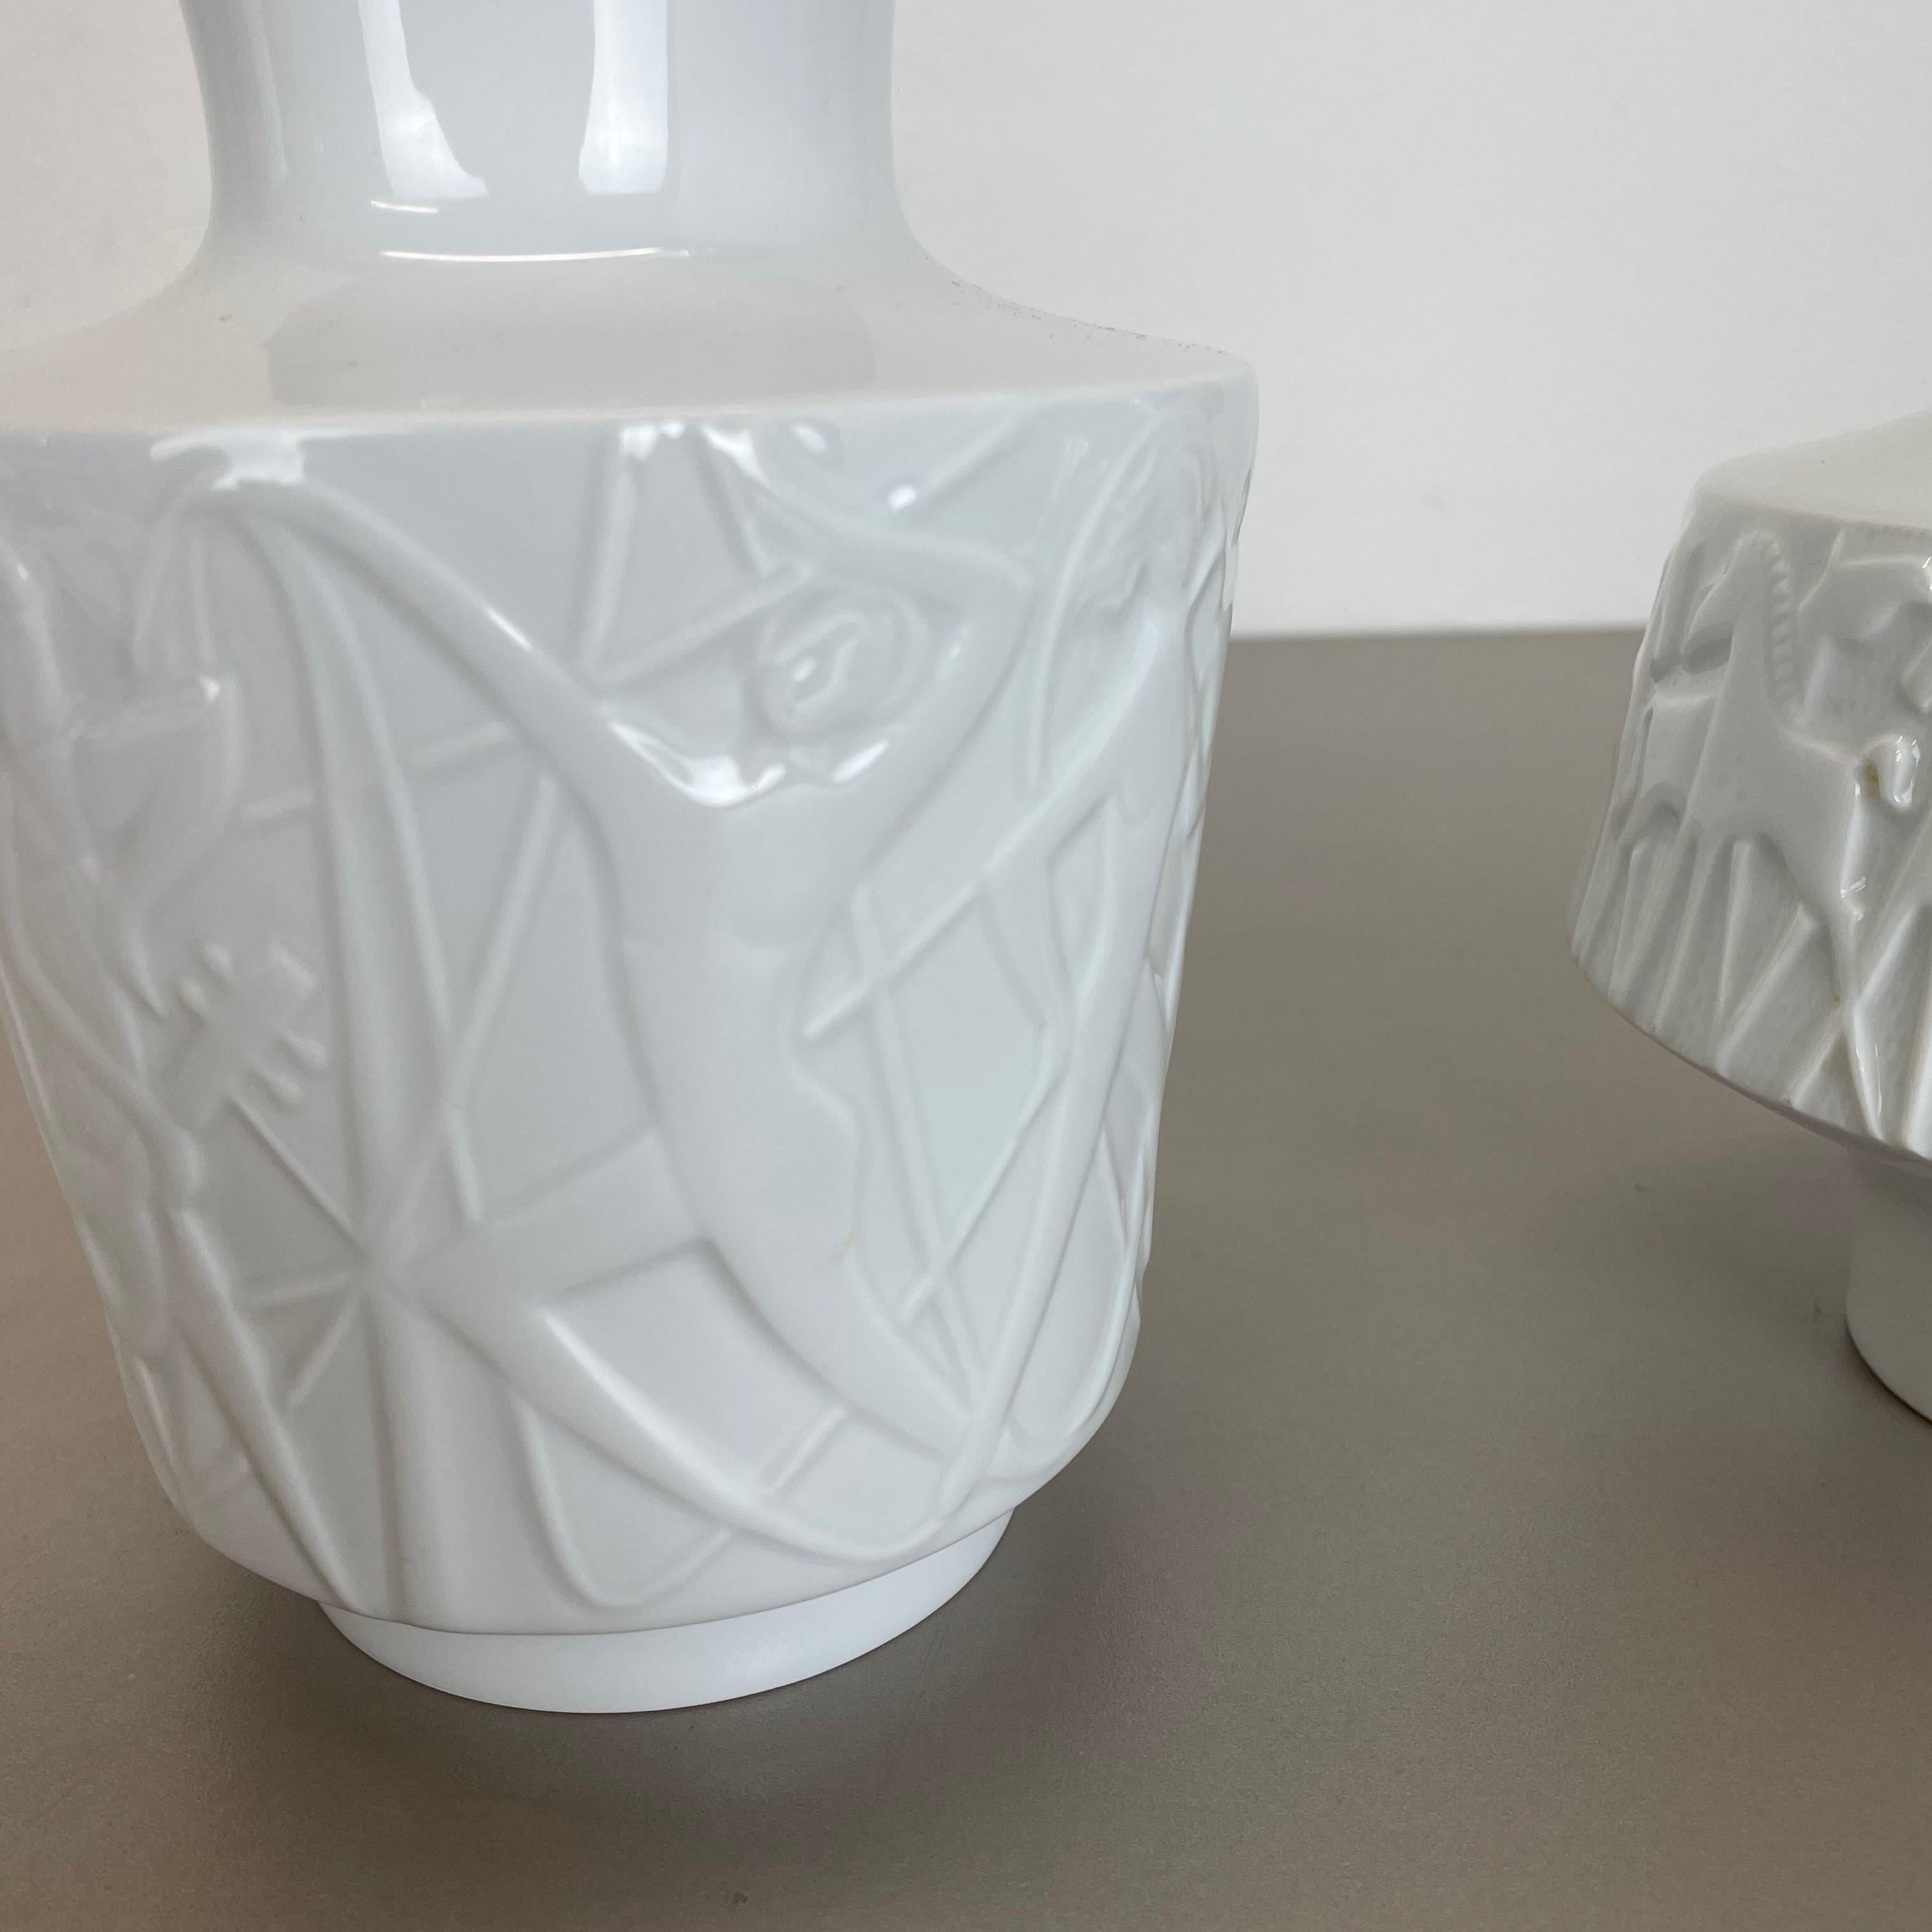 Set of 2 OP Art Biscuit Porcelain Vases by Edelstein Bavaria, Germany, 1970s For Sale 2